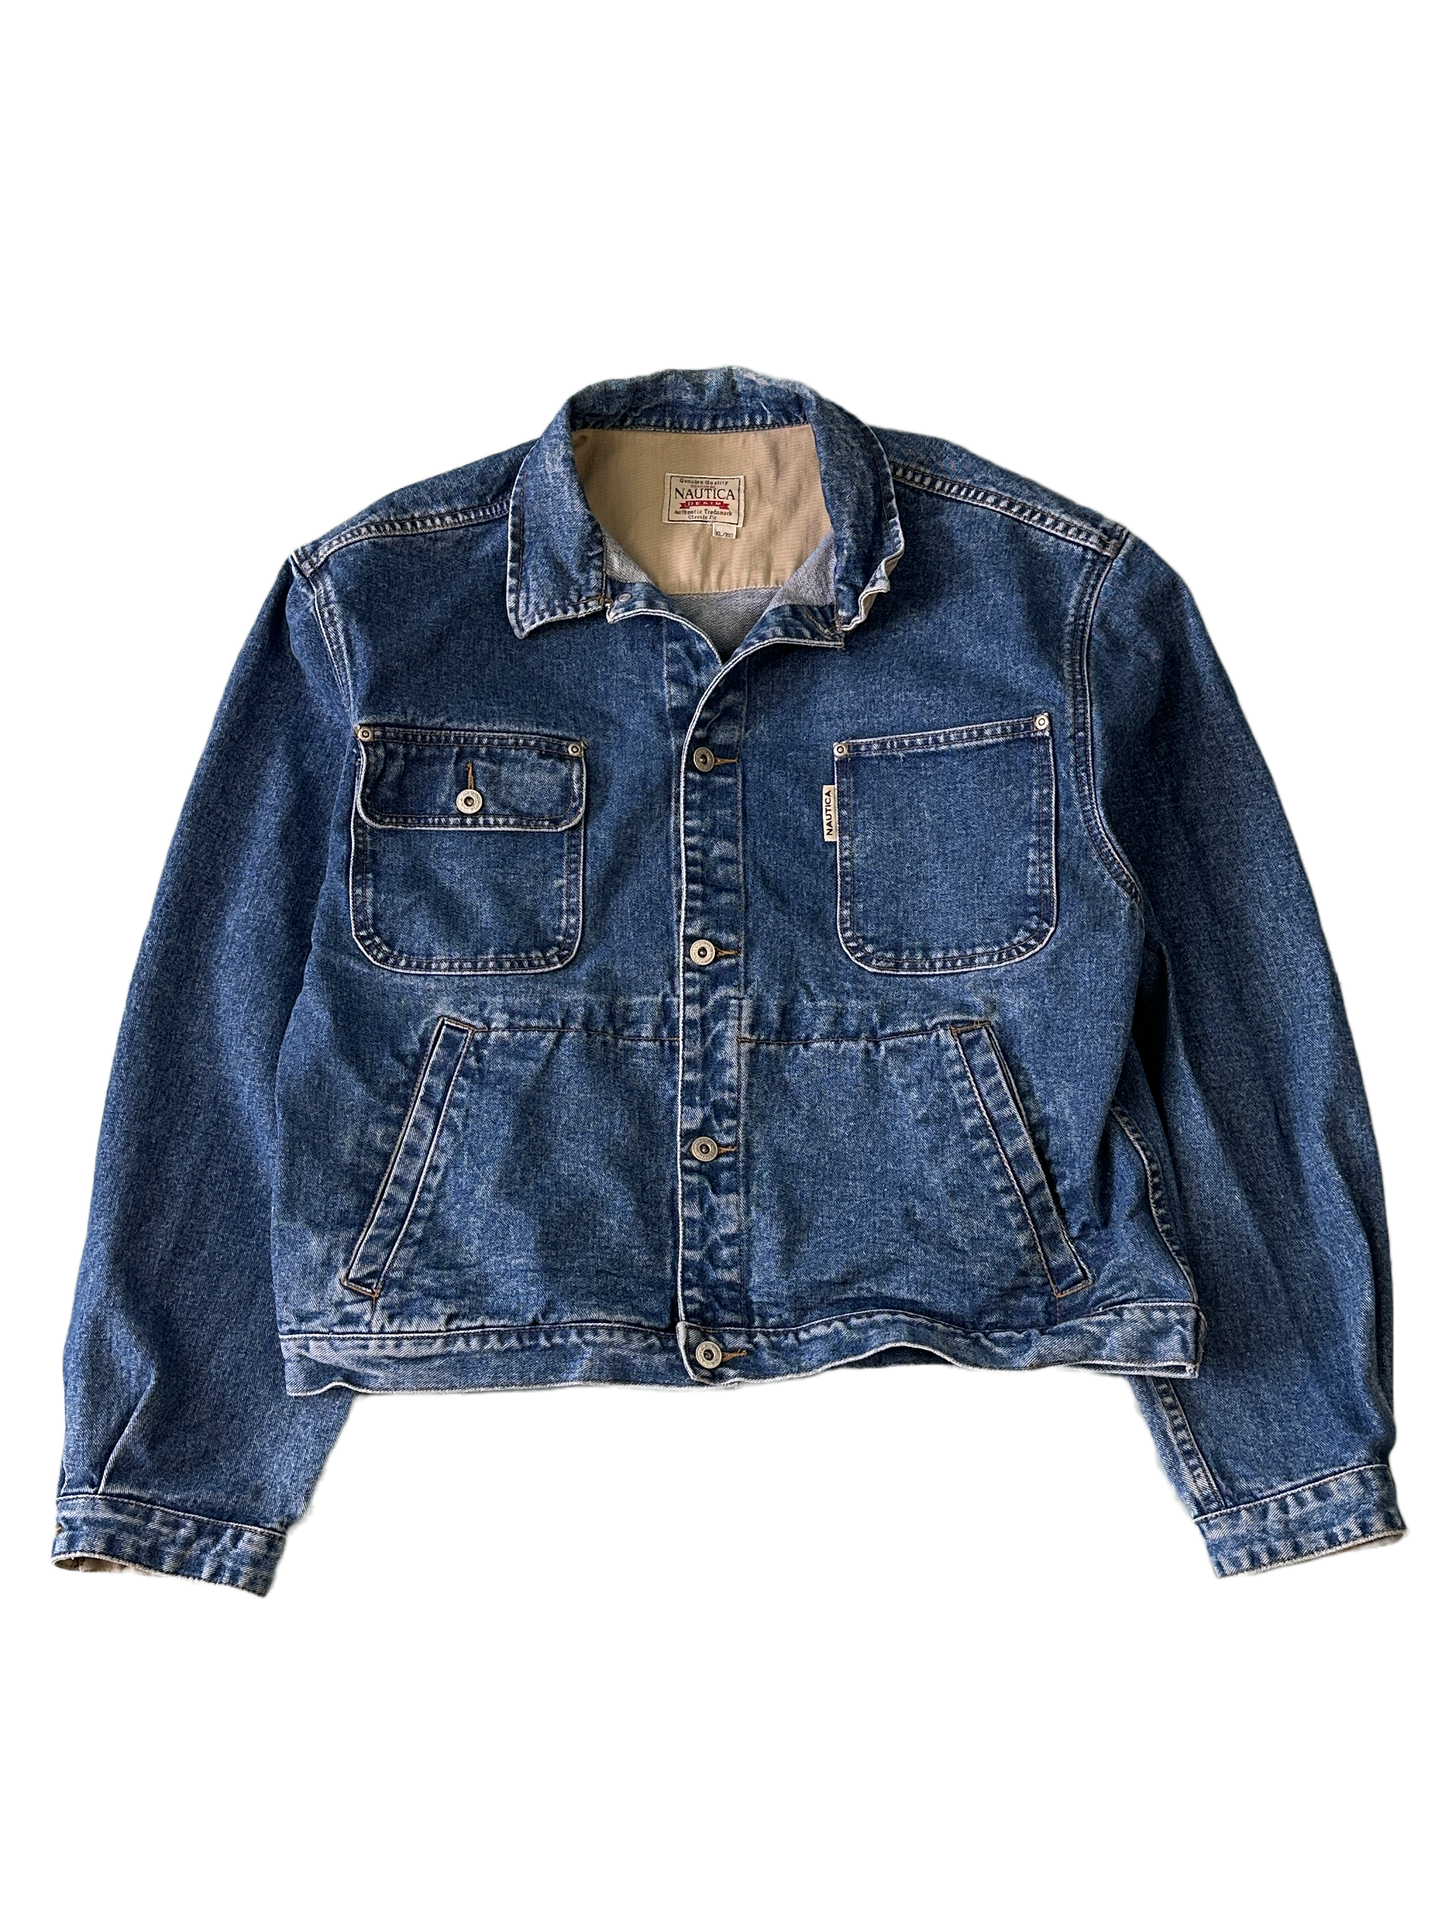 Nautica Vintage Denim Jacket - XL